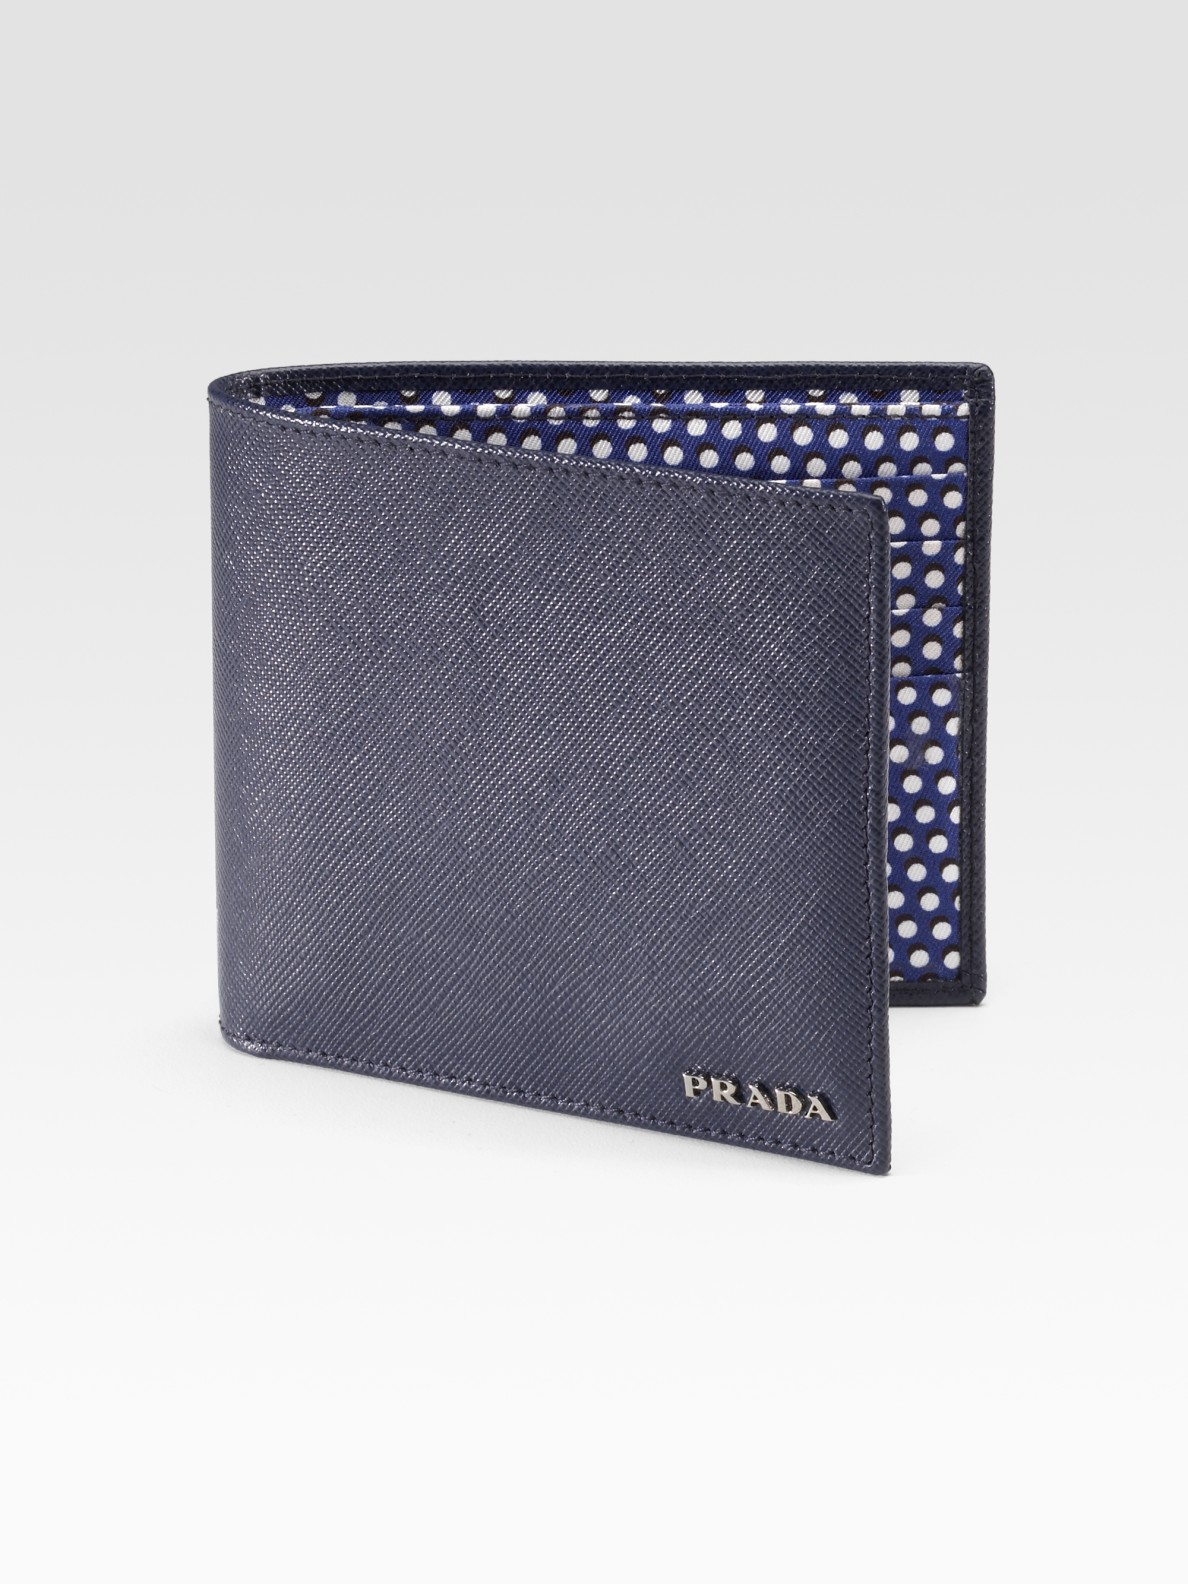 Prada Leather Wallet in Blue for Men - Lyst